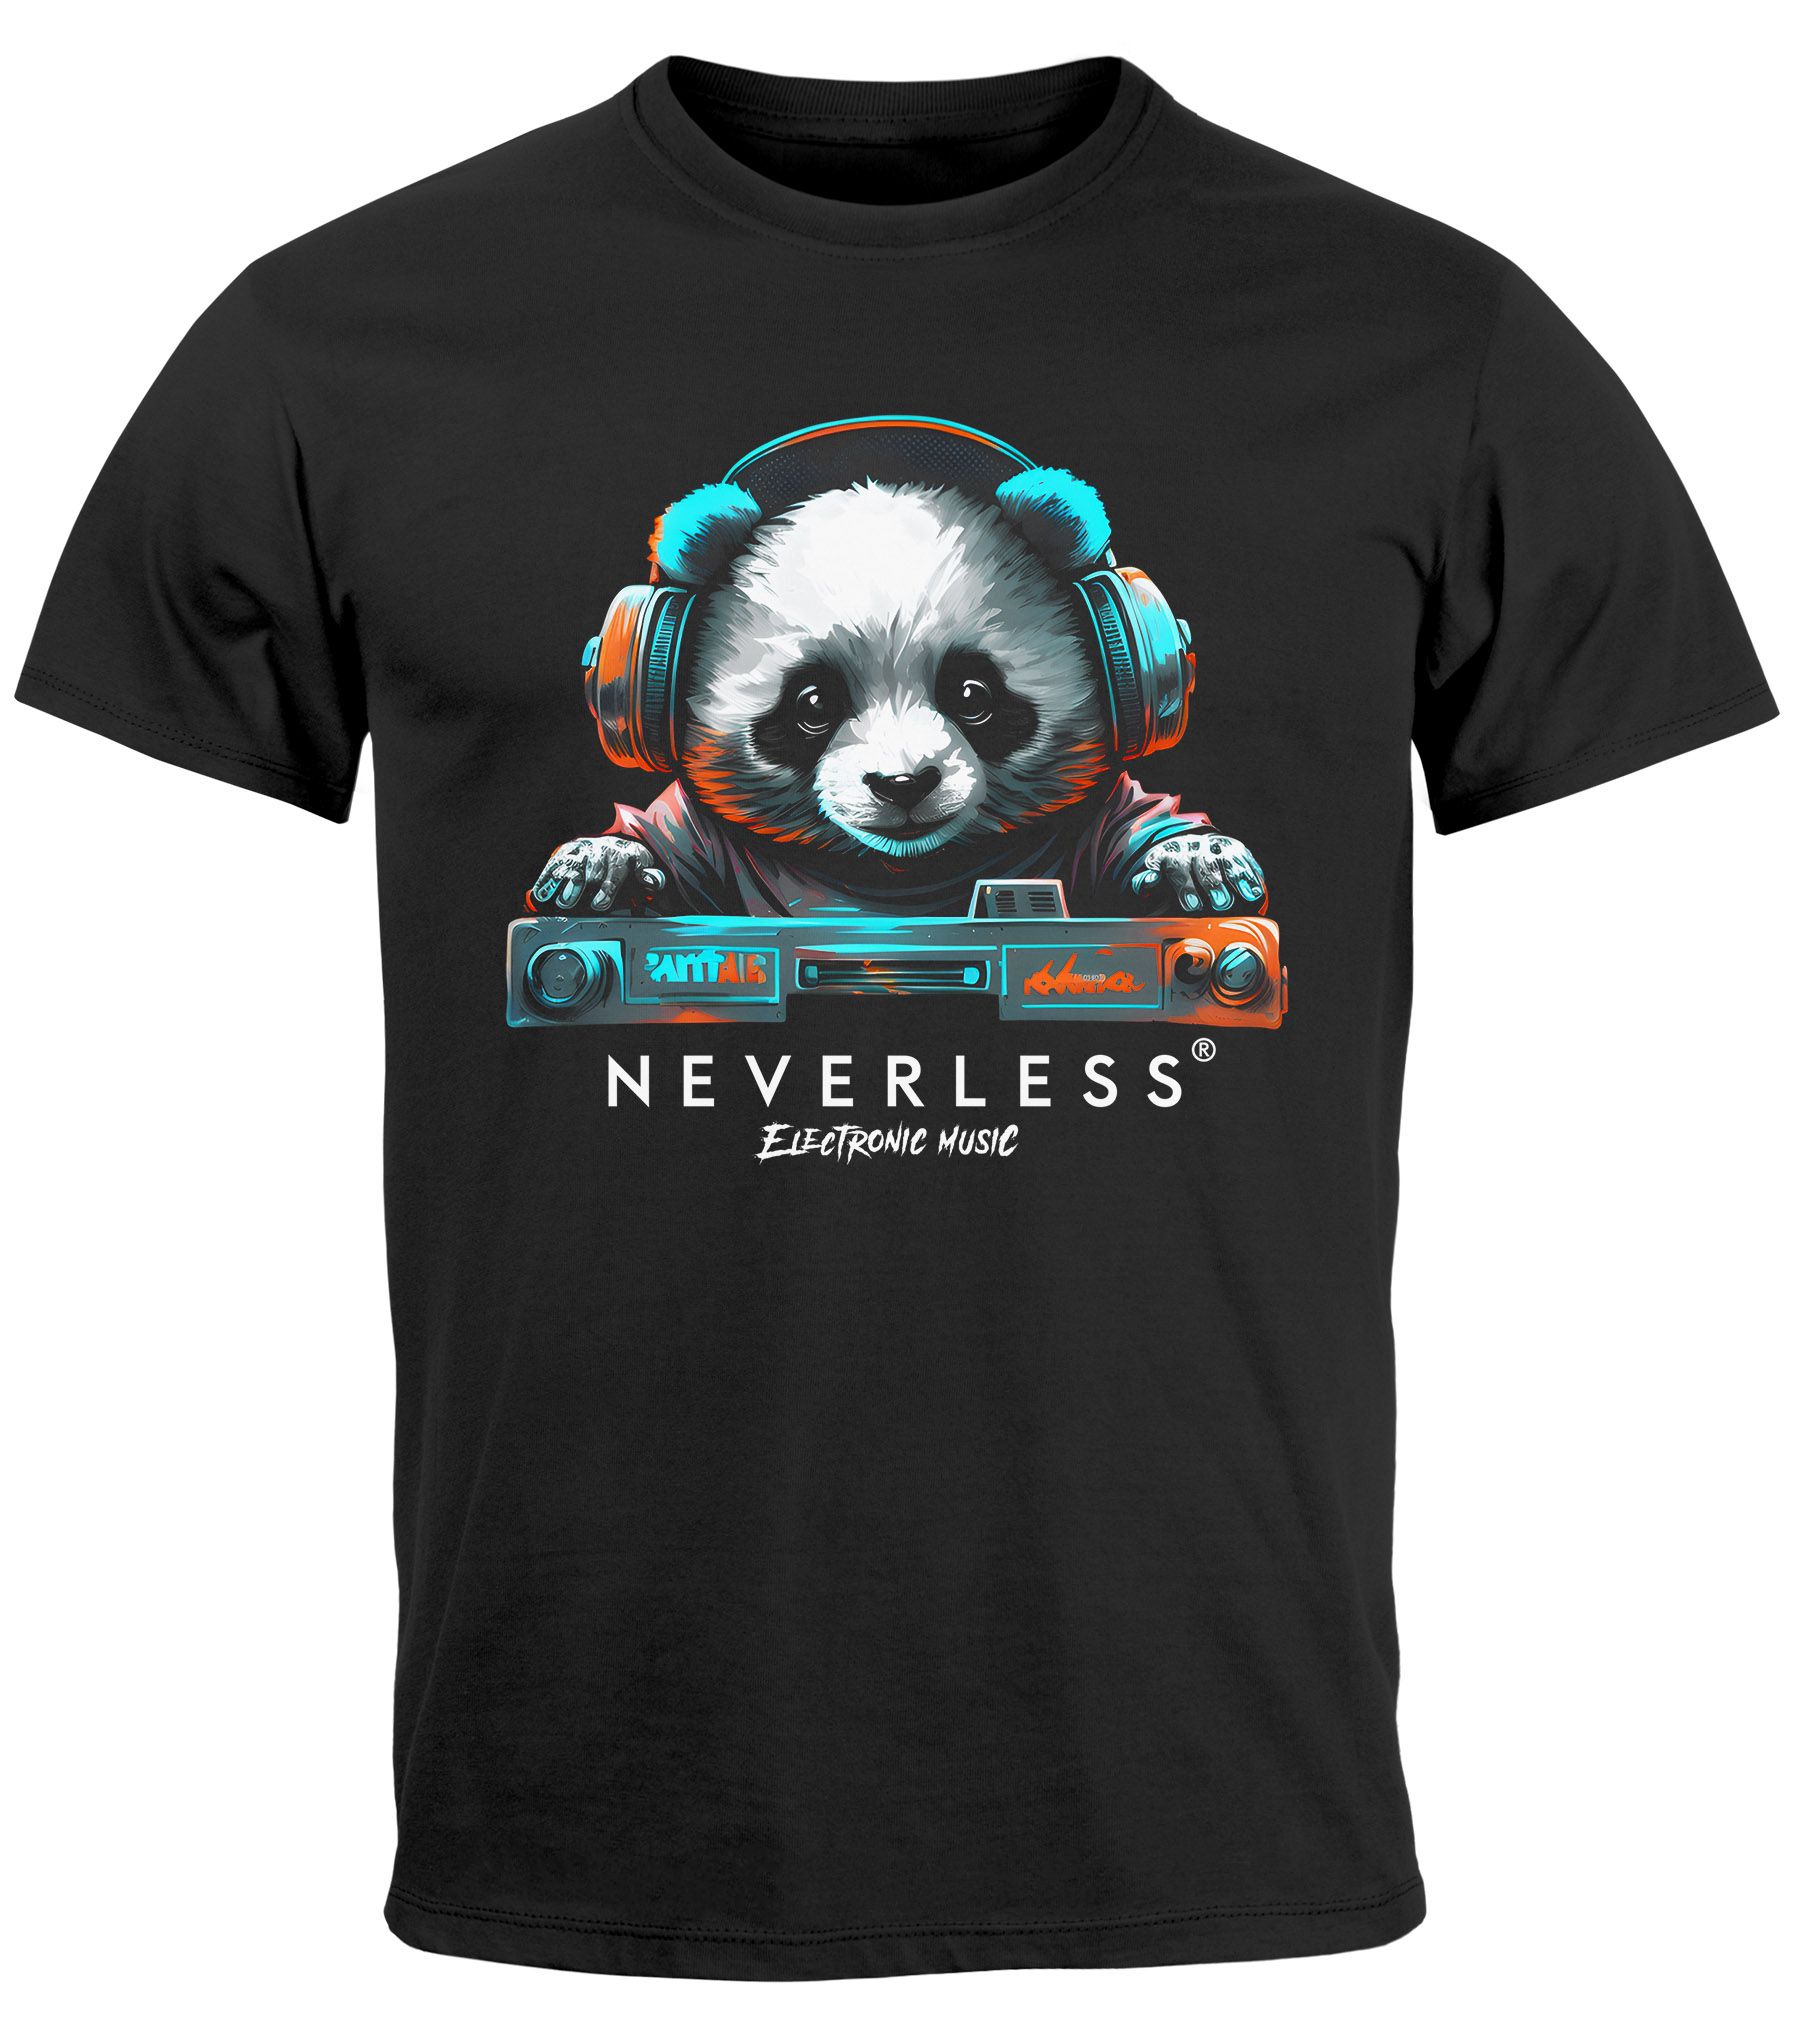 Herren T-Shirt Panda Bär Aufdruck Tiermotiv Musik Techo Print Fashion Streetstyle Neverless®